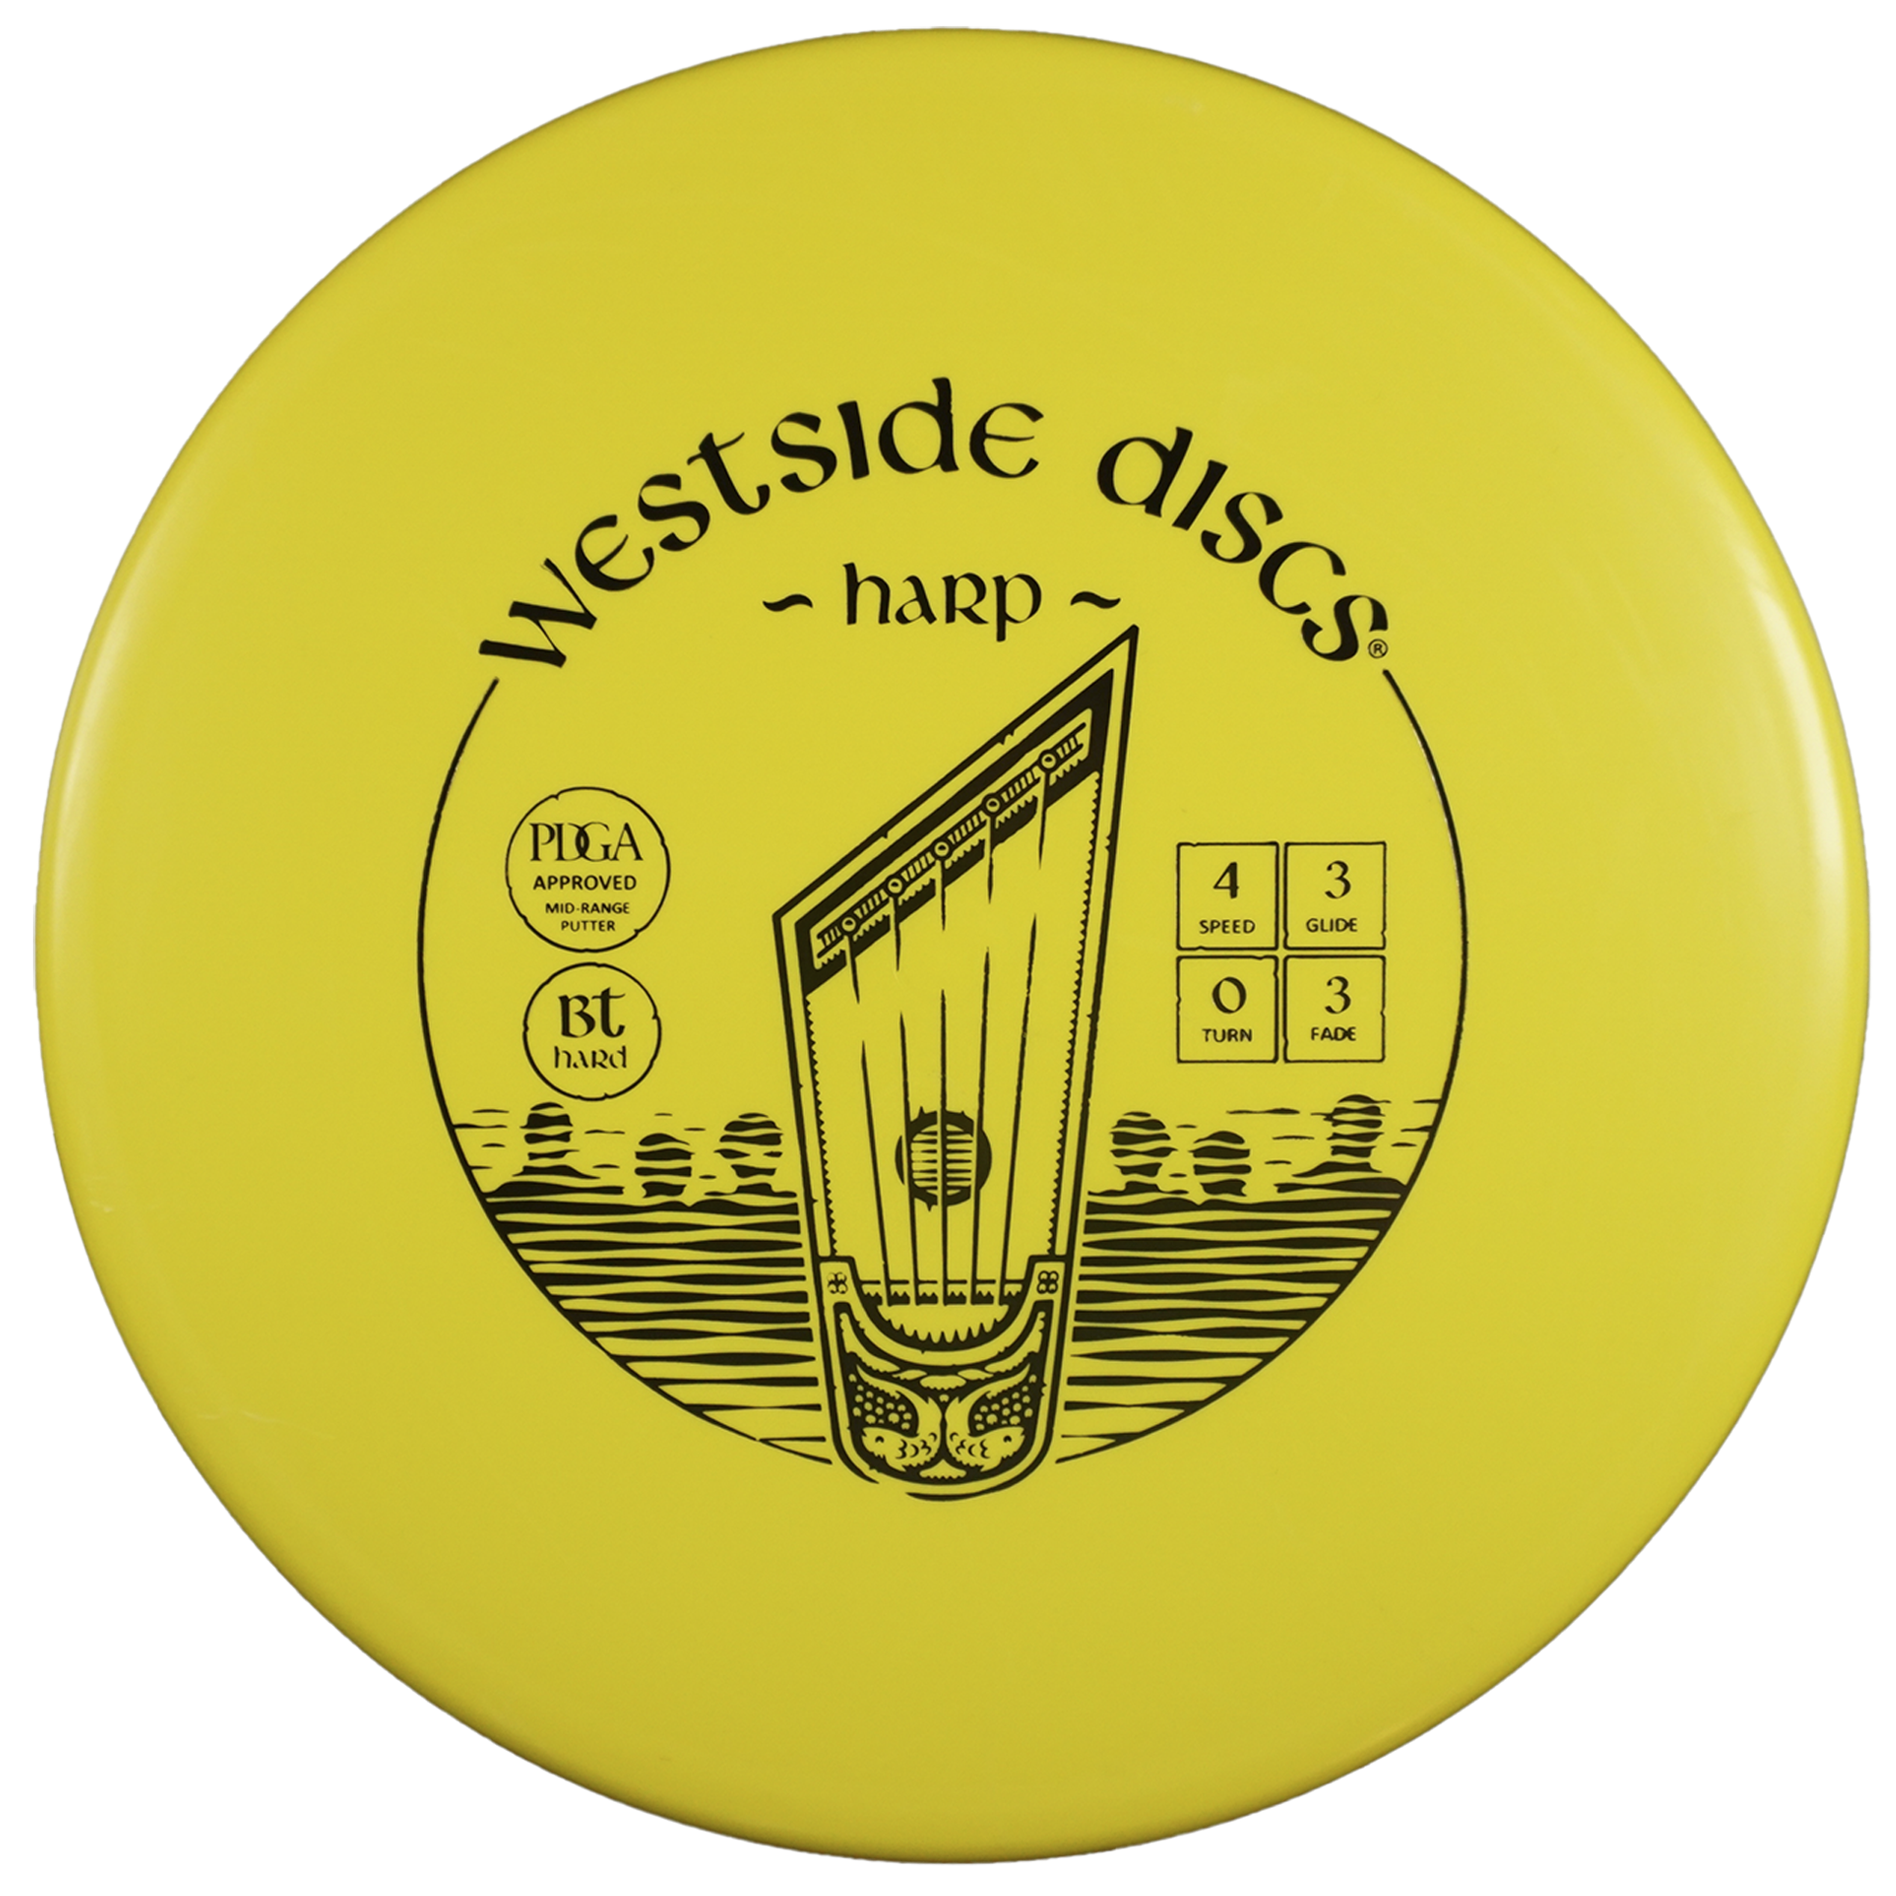 Westside Discs BT Hard Harp